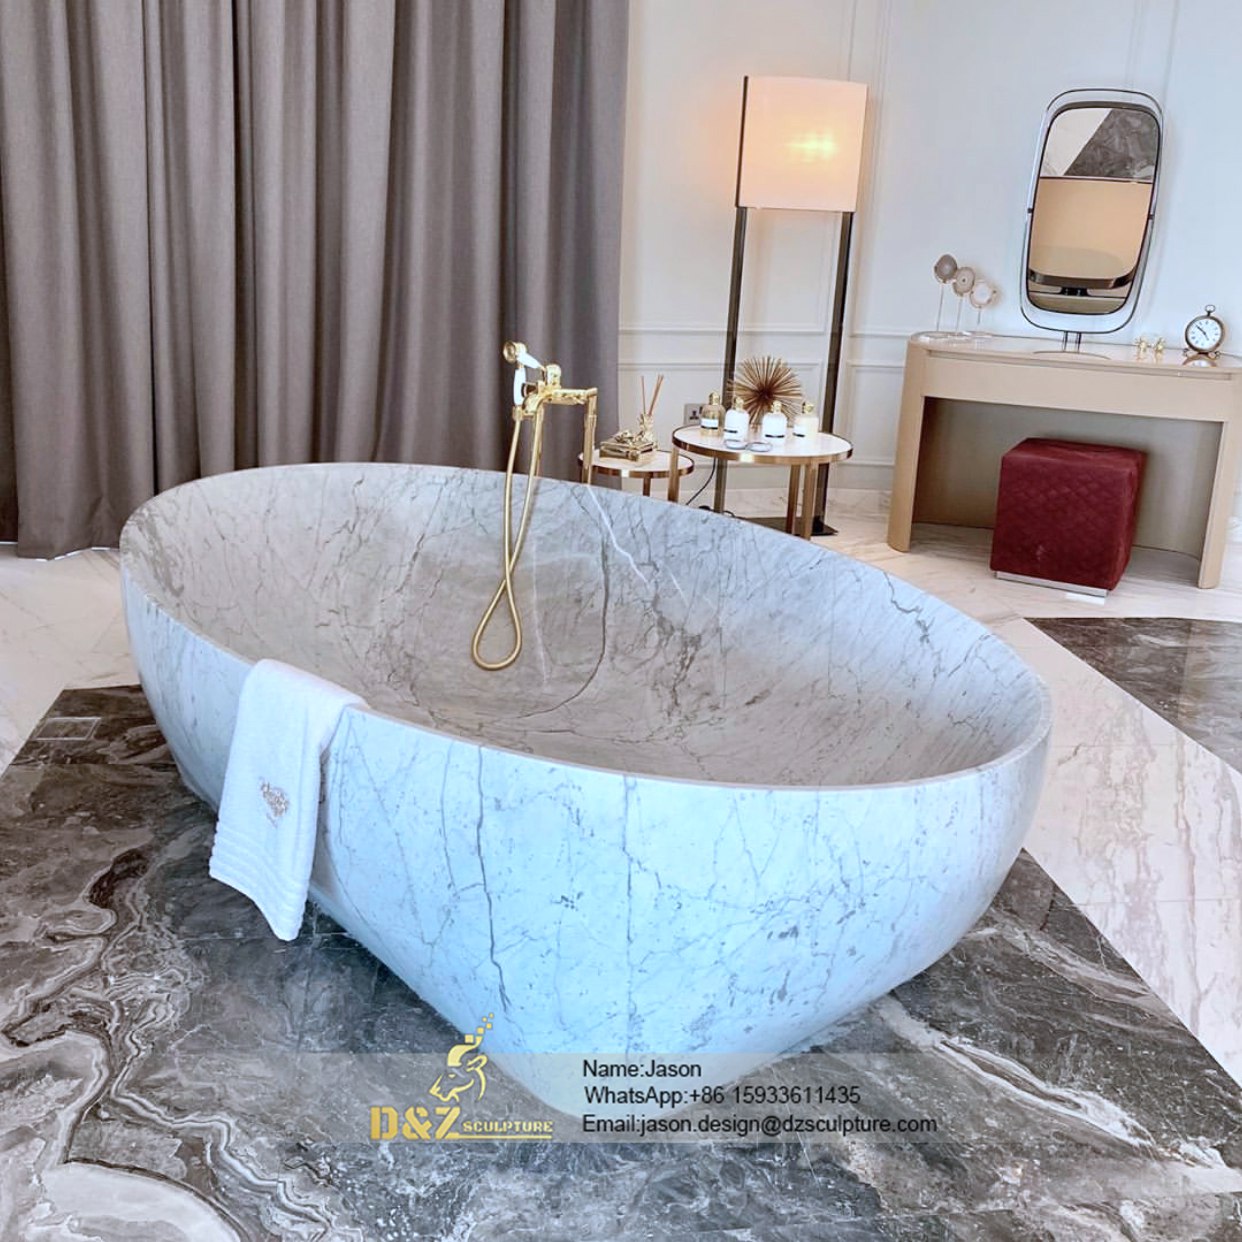 The freestanding stone bathtub